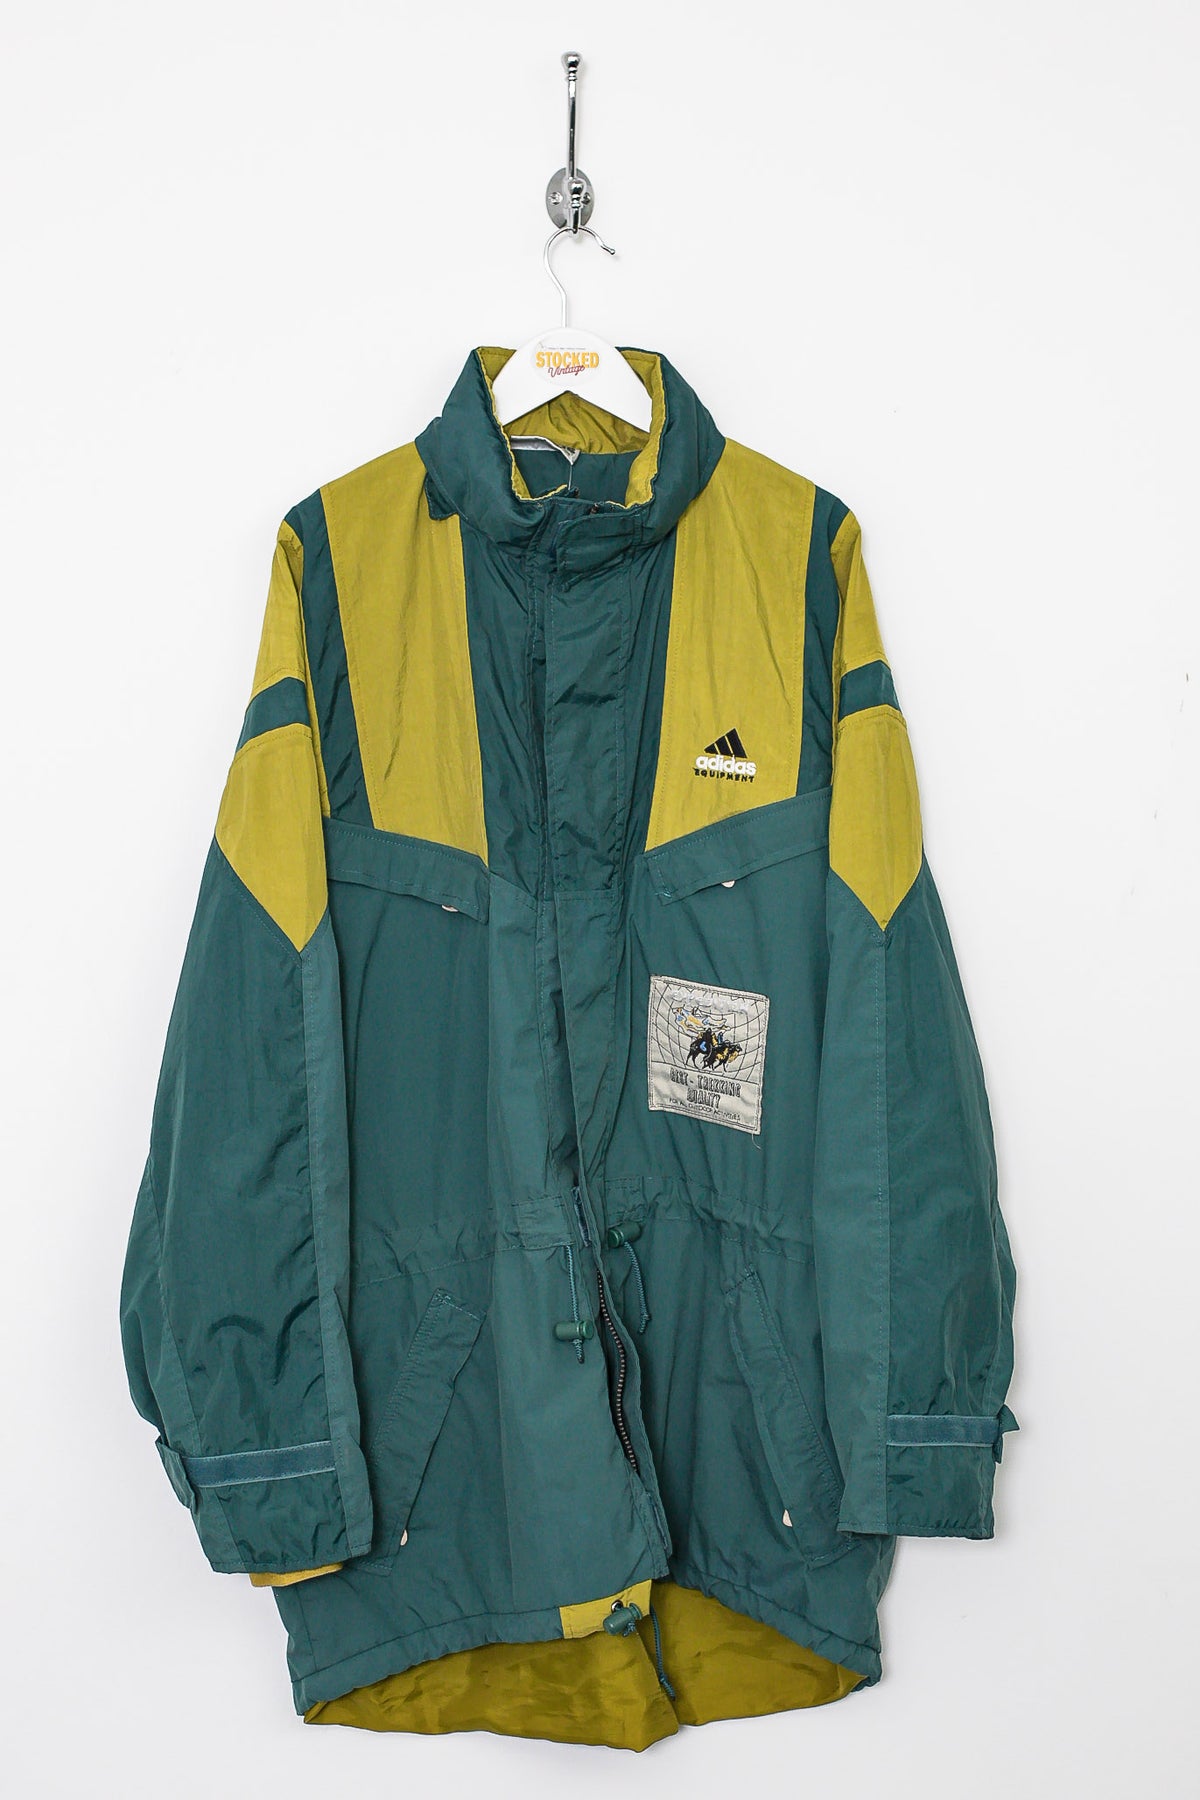 90s Adidas Equipment Jacket (XL)